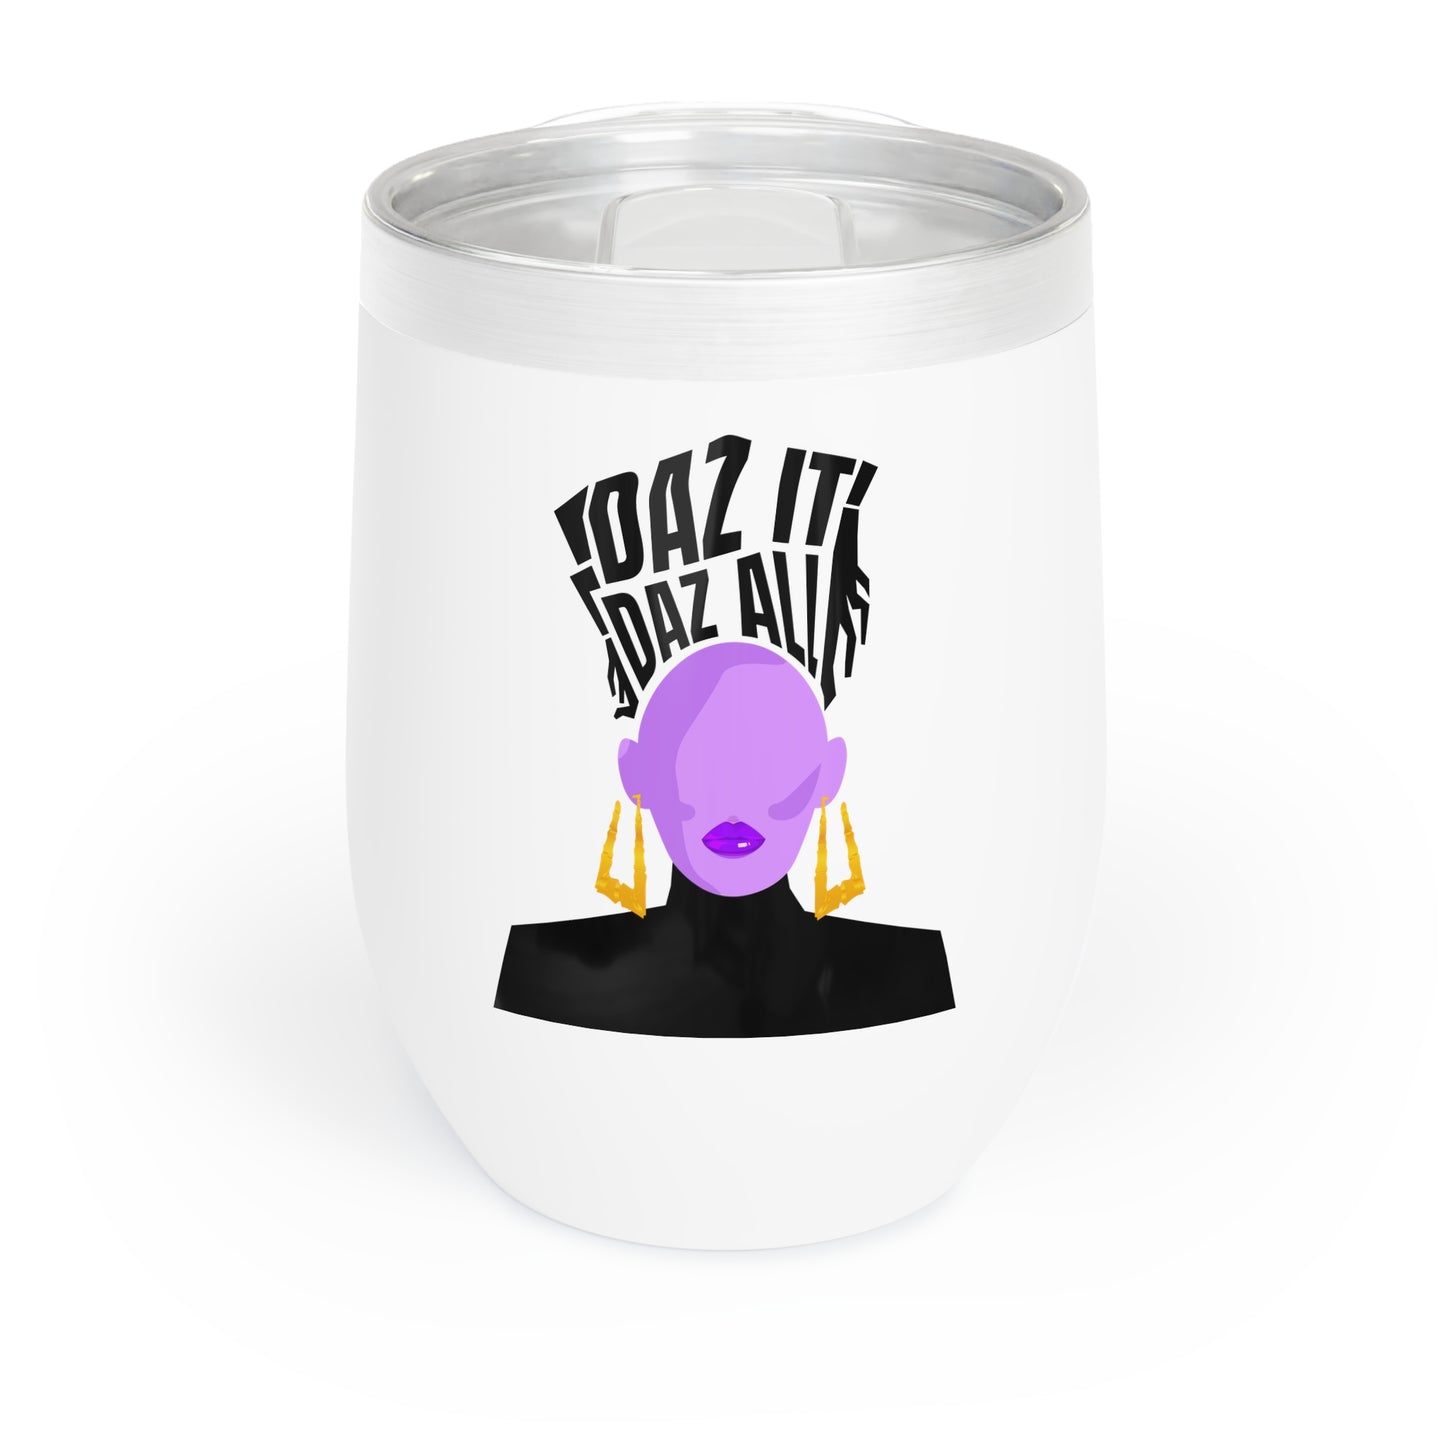 Daz It, Daz All- Chill Wine Tumbler (Orange Lip Logo)